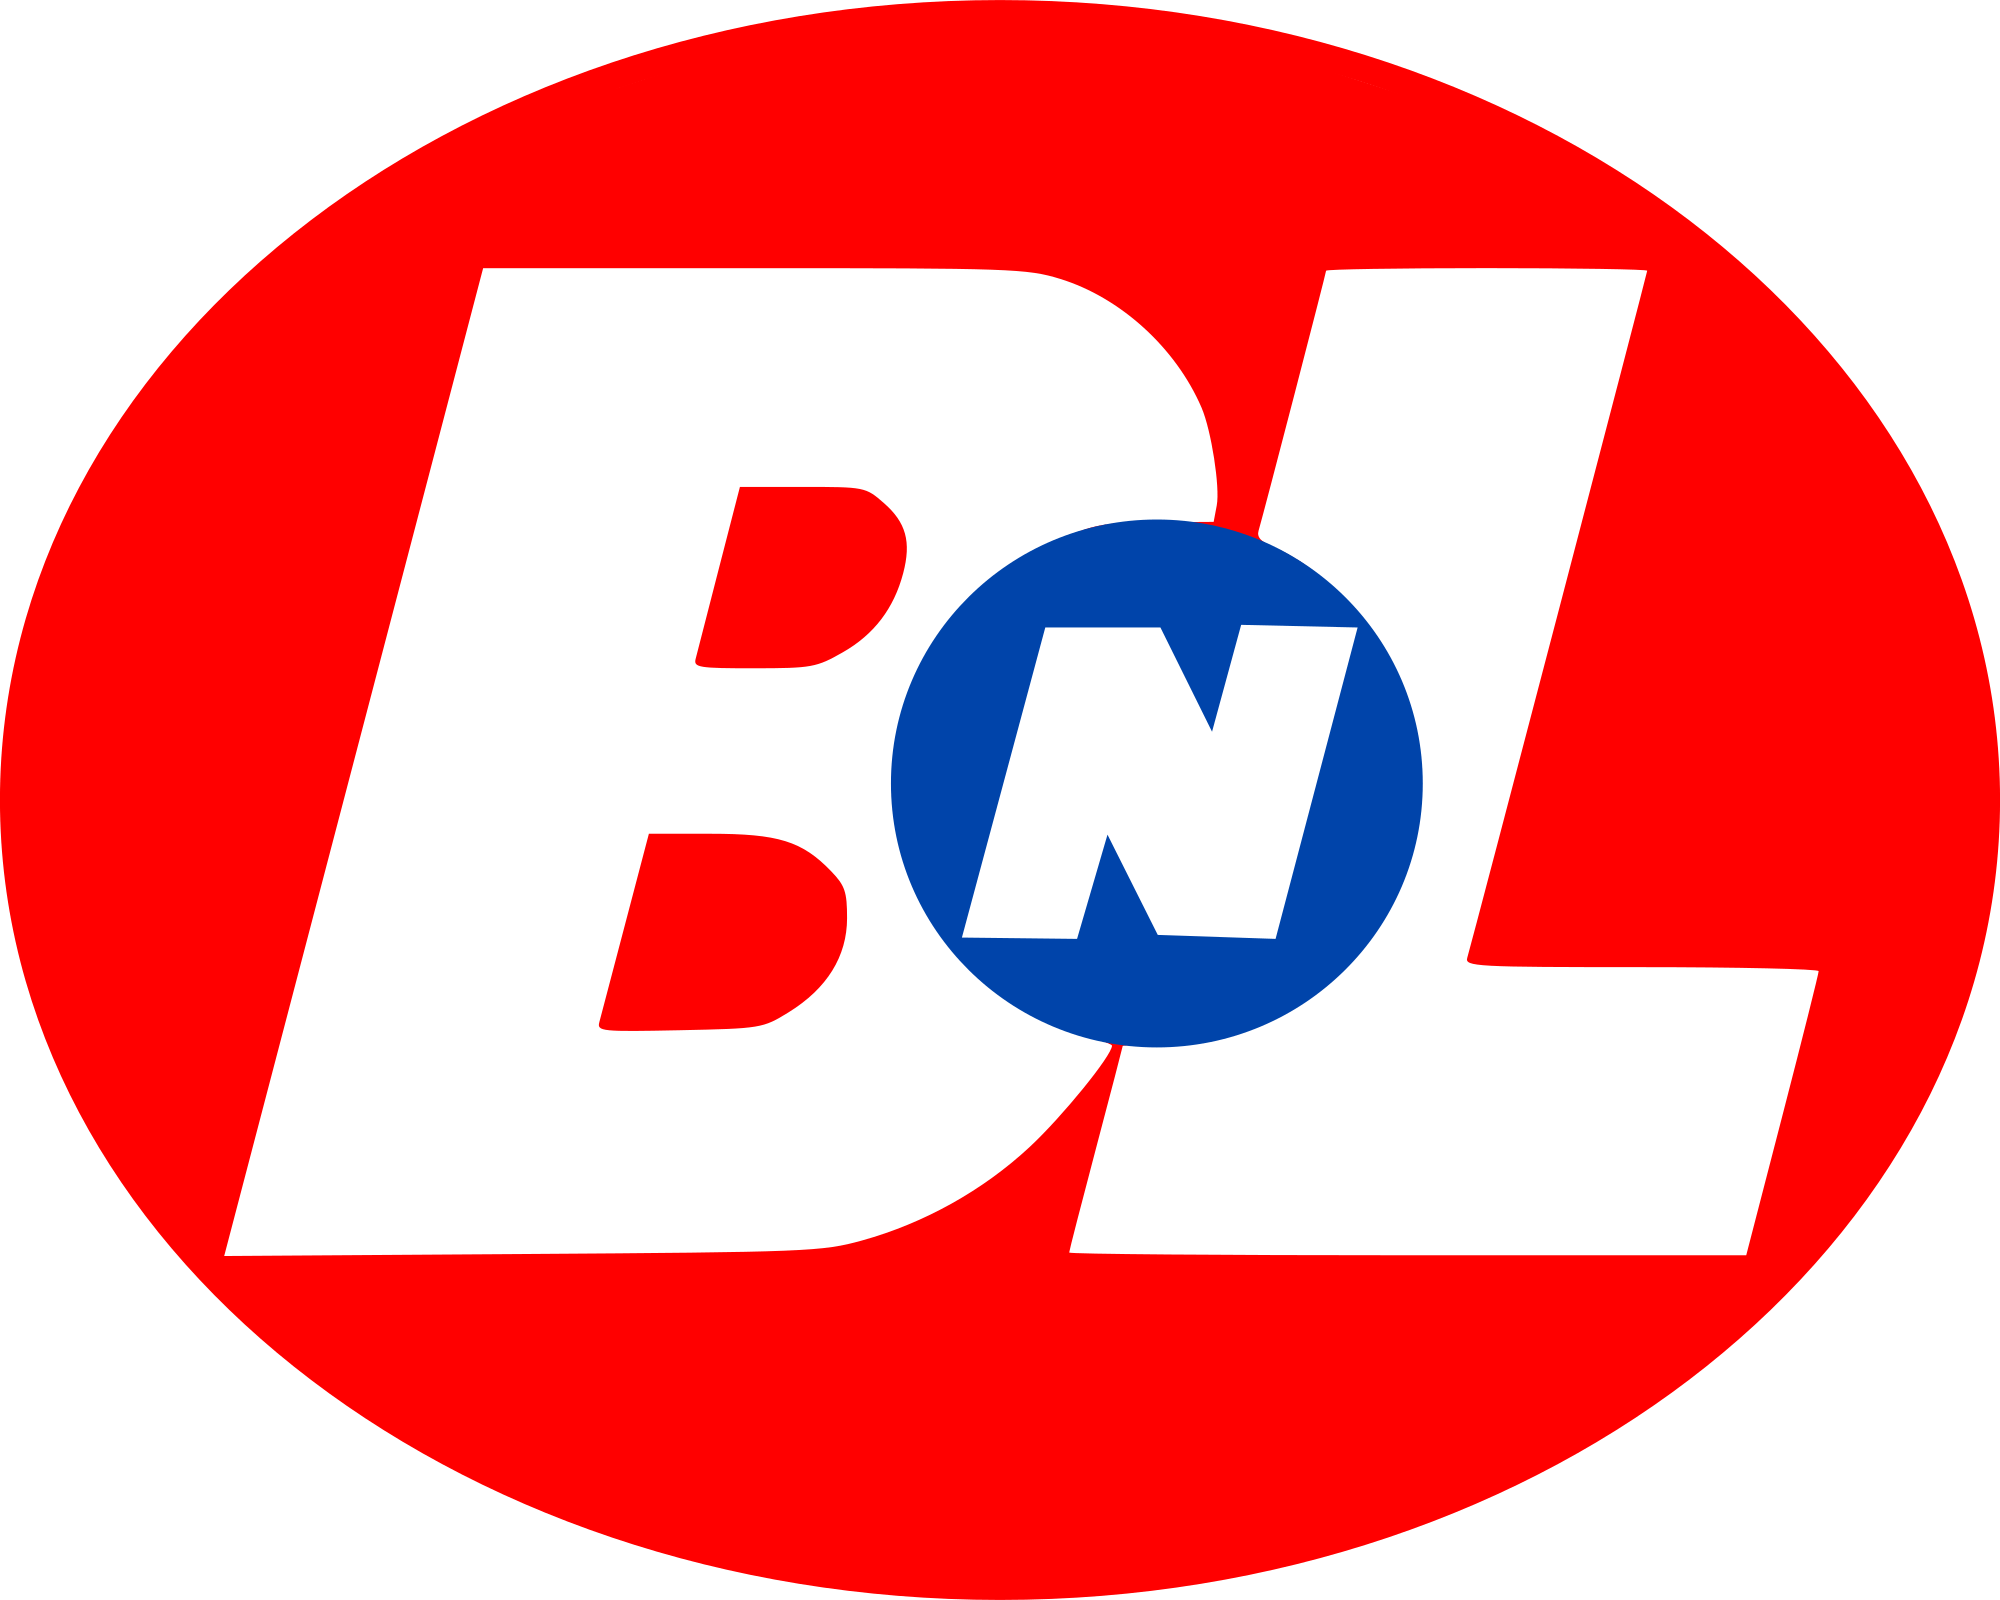 BNL Logo - File:BnL logo.svg - Wikimedia Commons